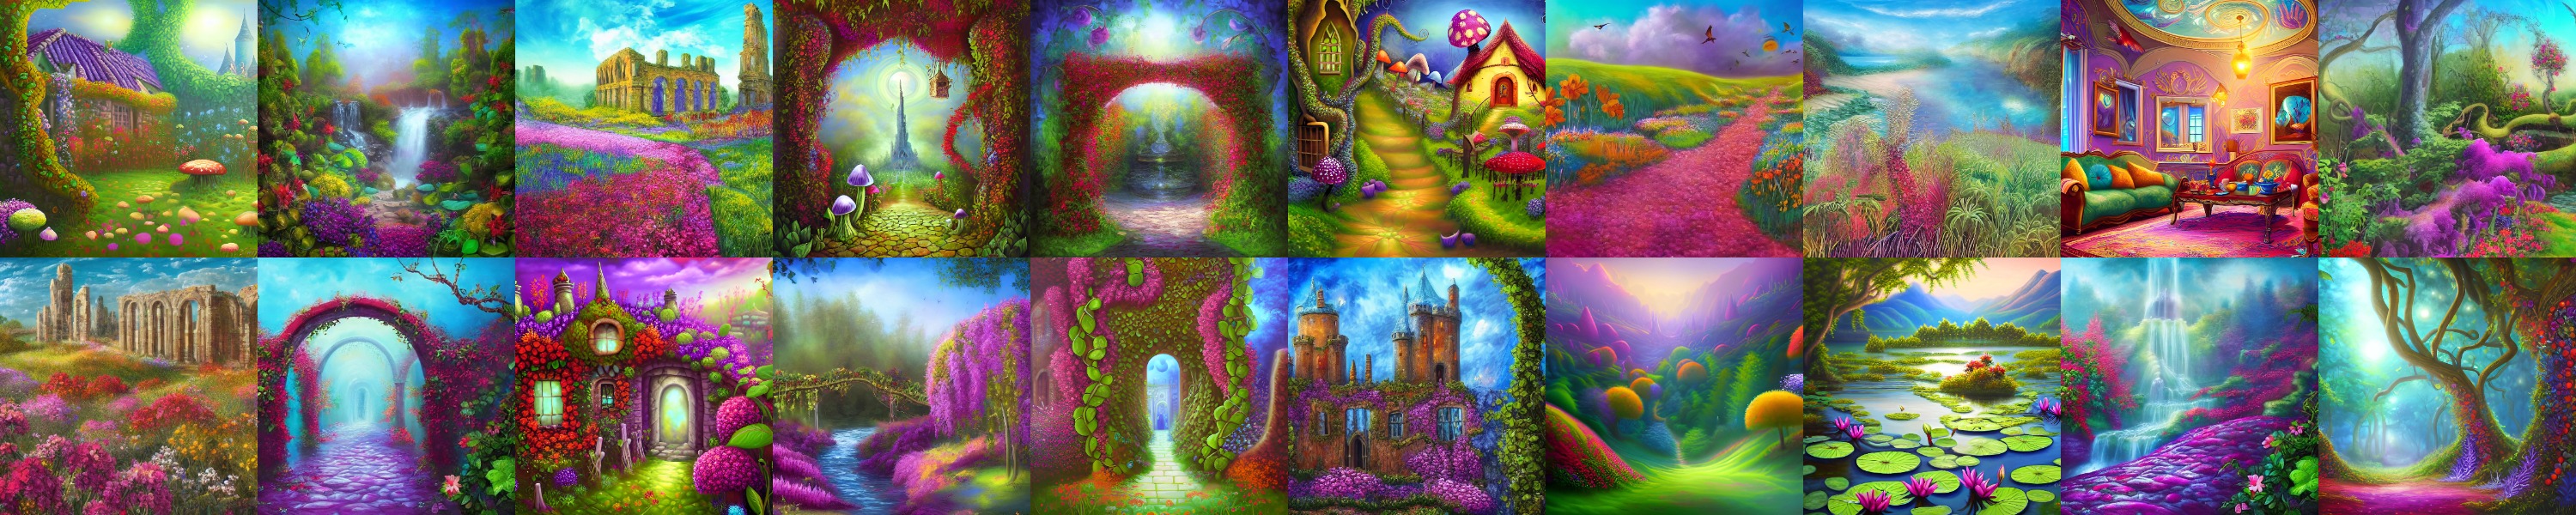 Enchanted Kingdom Background Pack 1